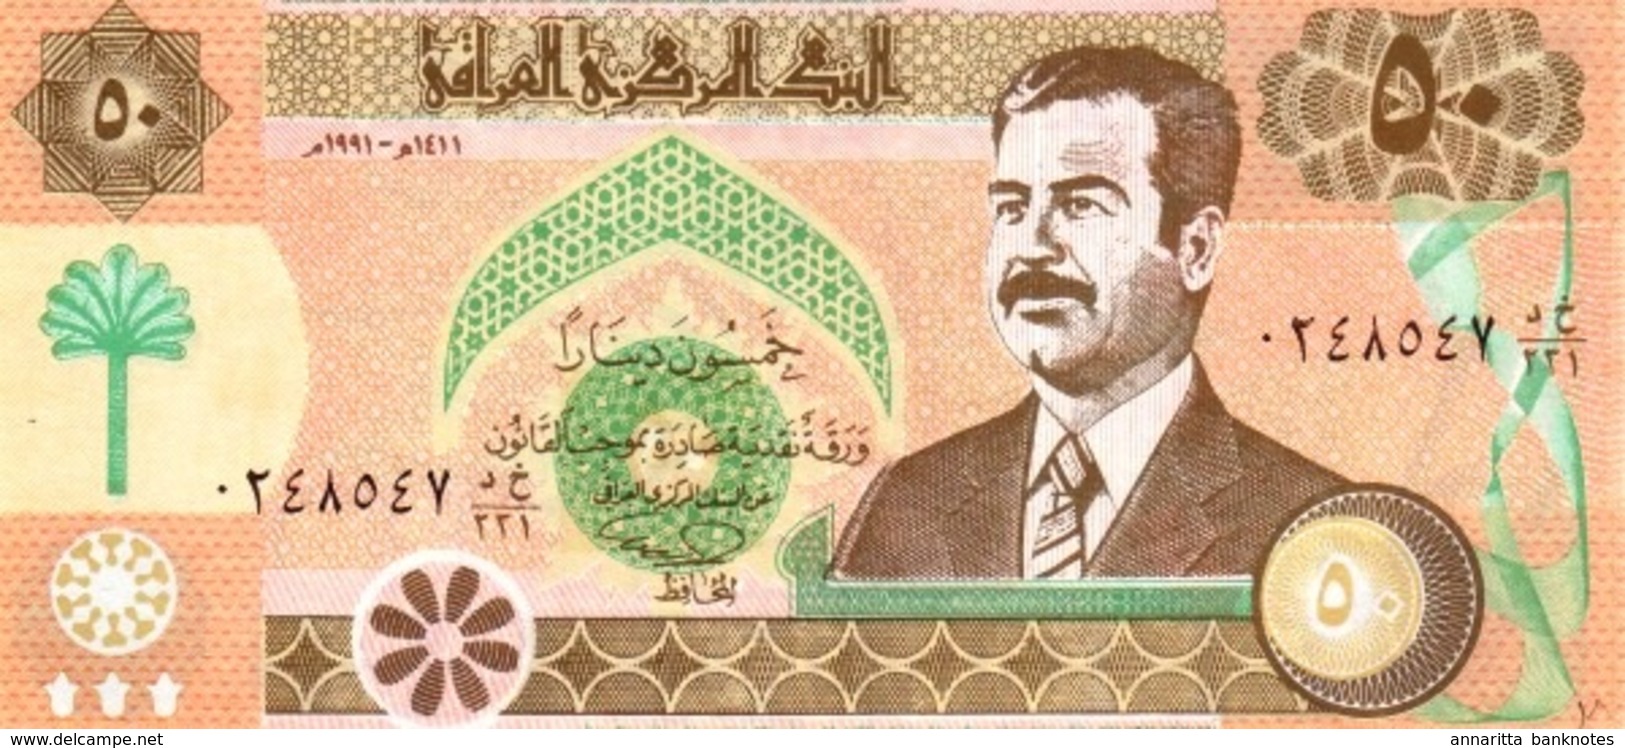 IRAK 50 DINARS 1990 P-75 NEUF [IQ332a] - Irak